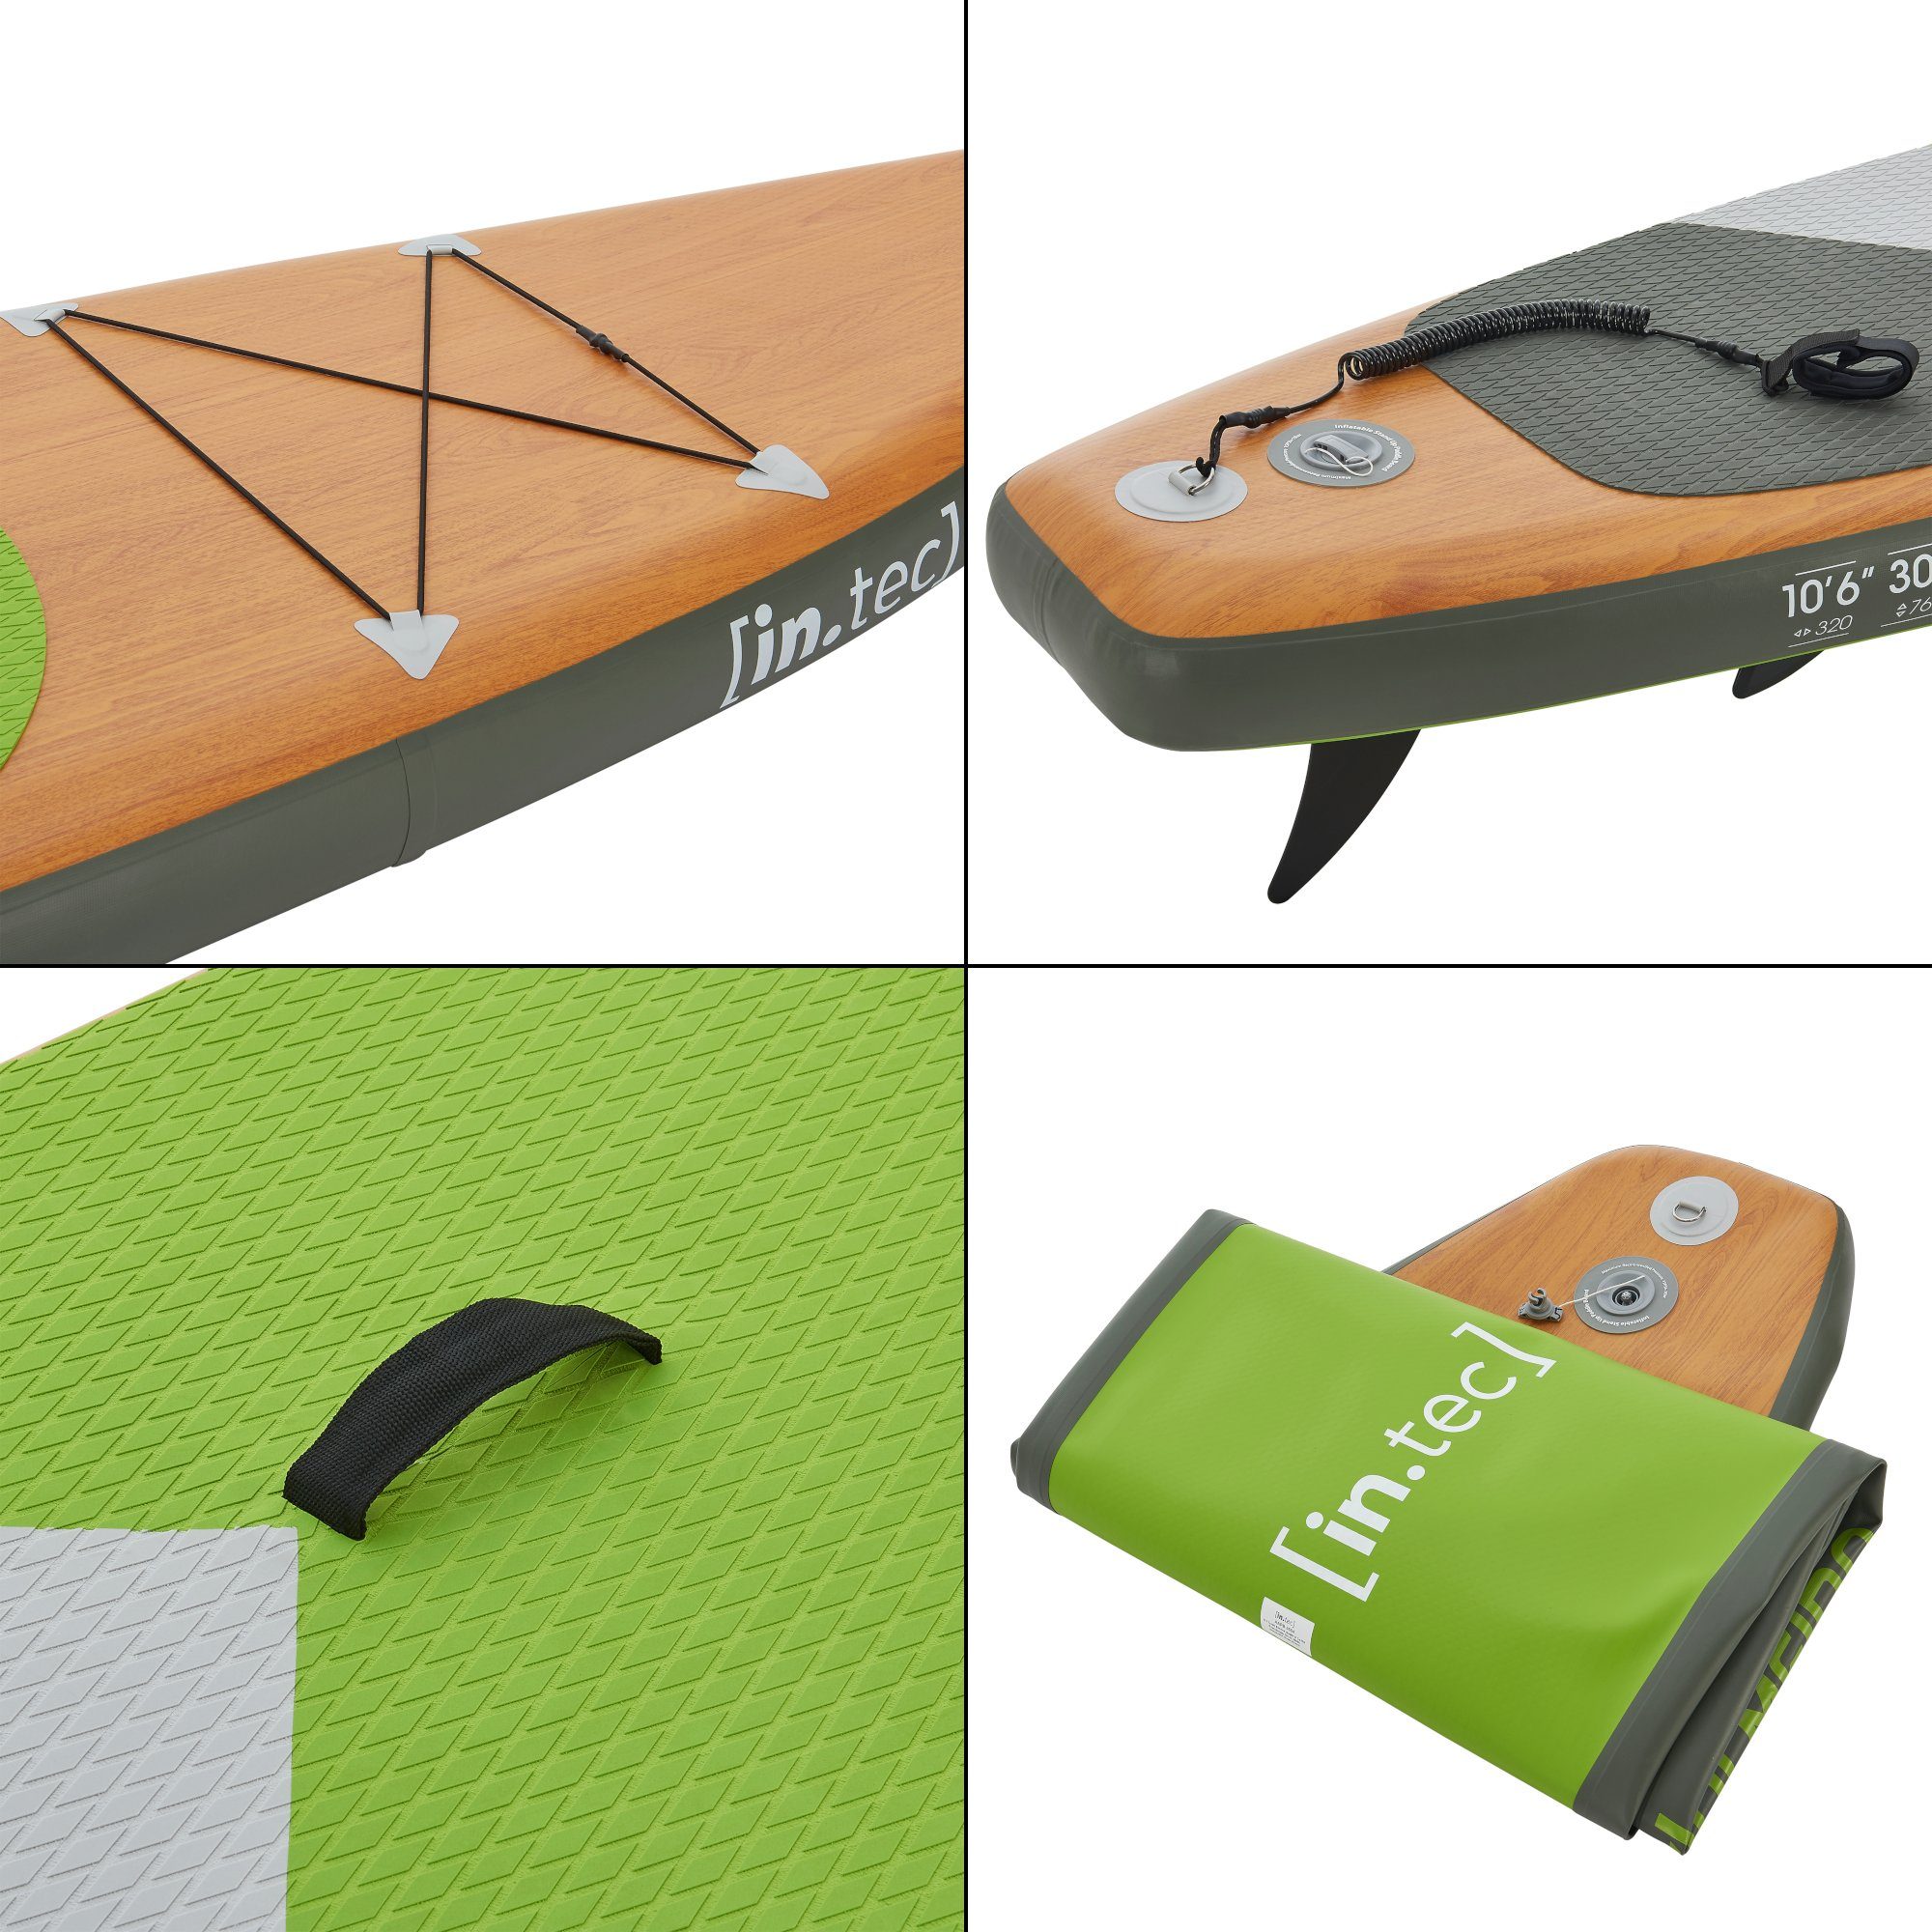 Paddleboard SUP-Board, 320x76x15cm in.tec Palmeira Grün/Holzoptik/Grau